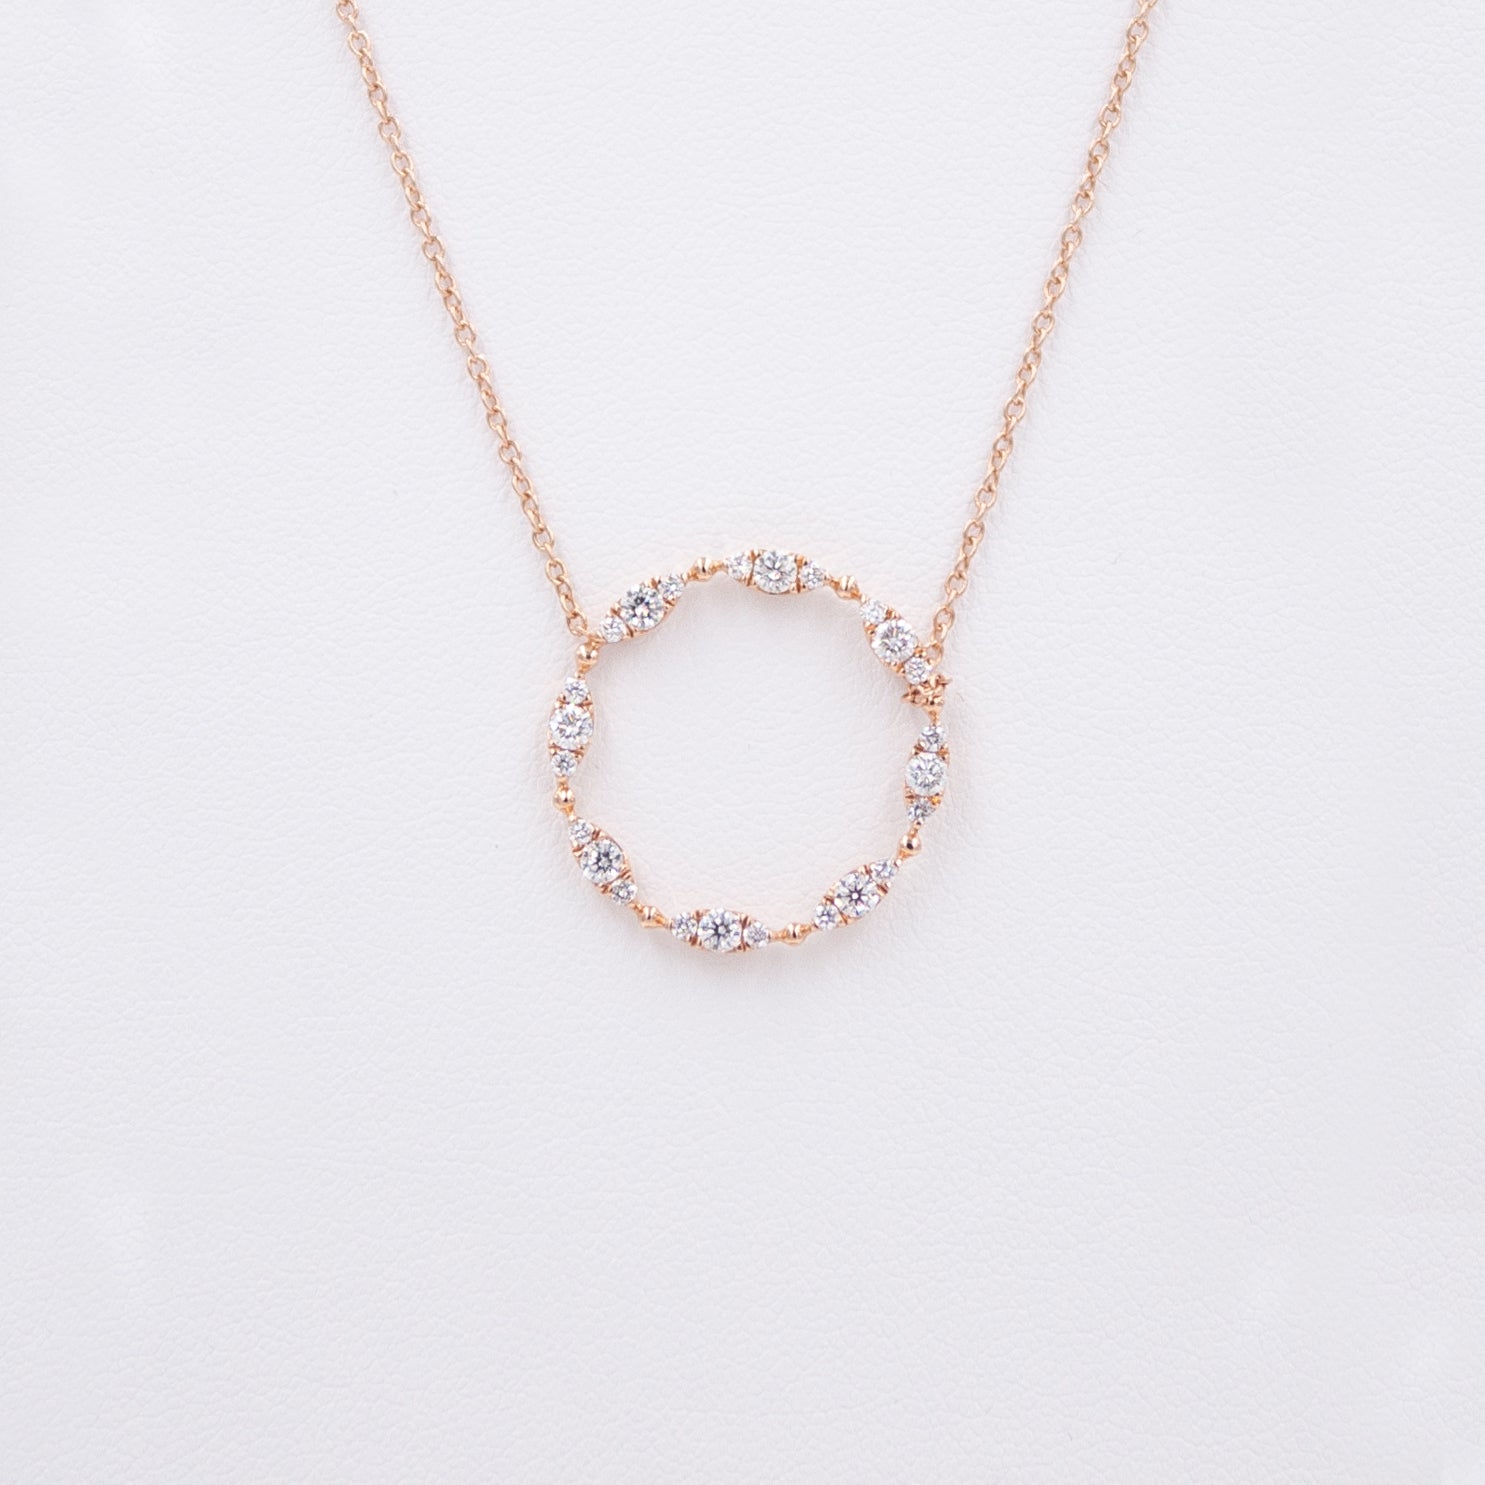 Daisy Necklace with Diamonds